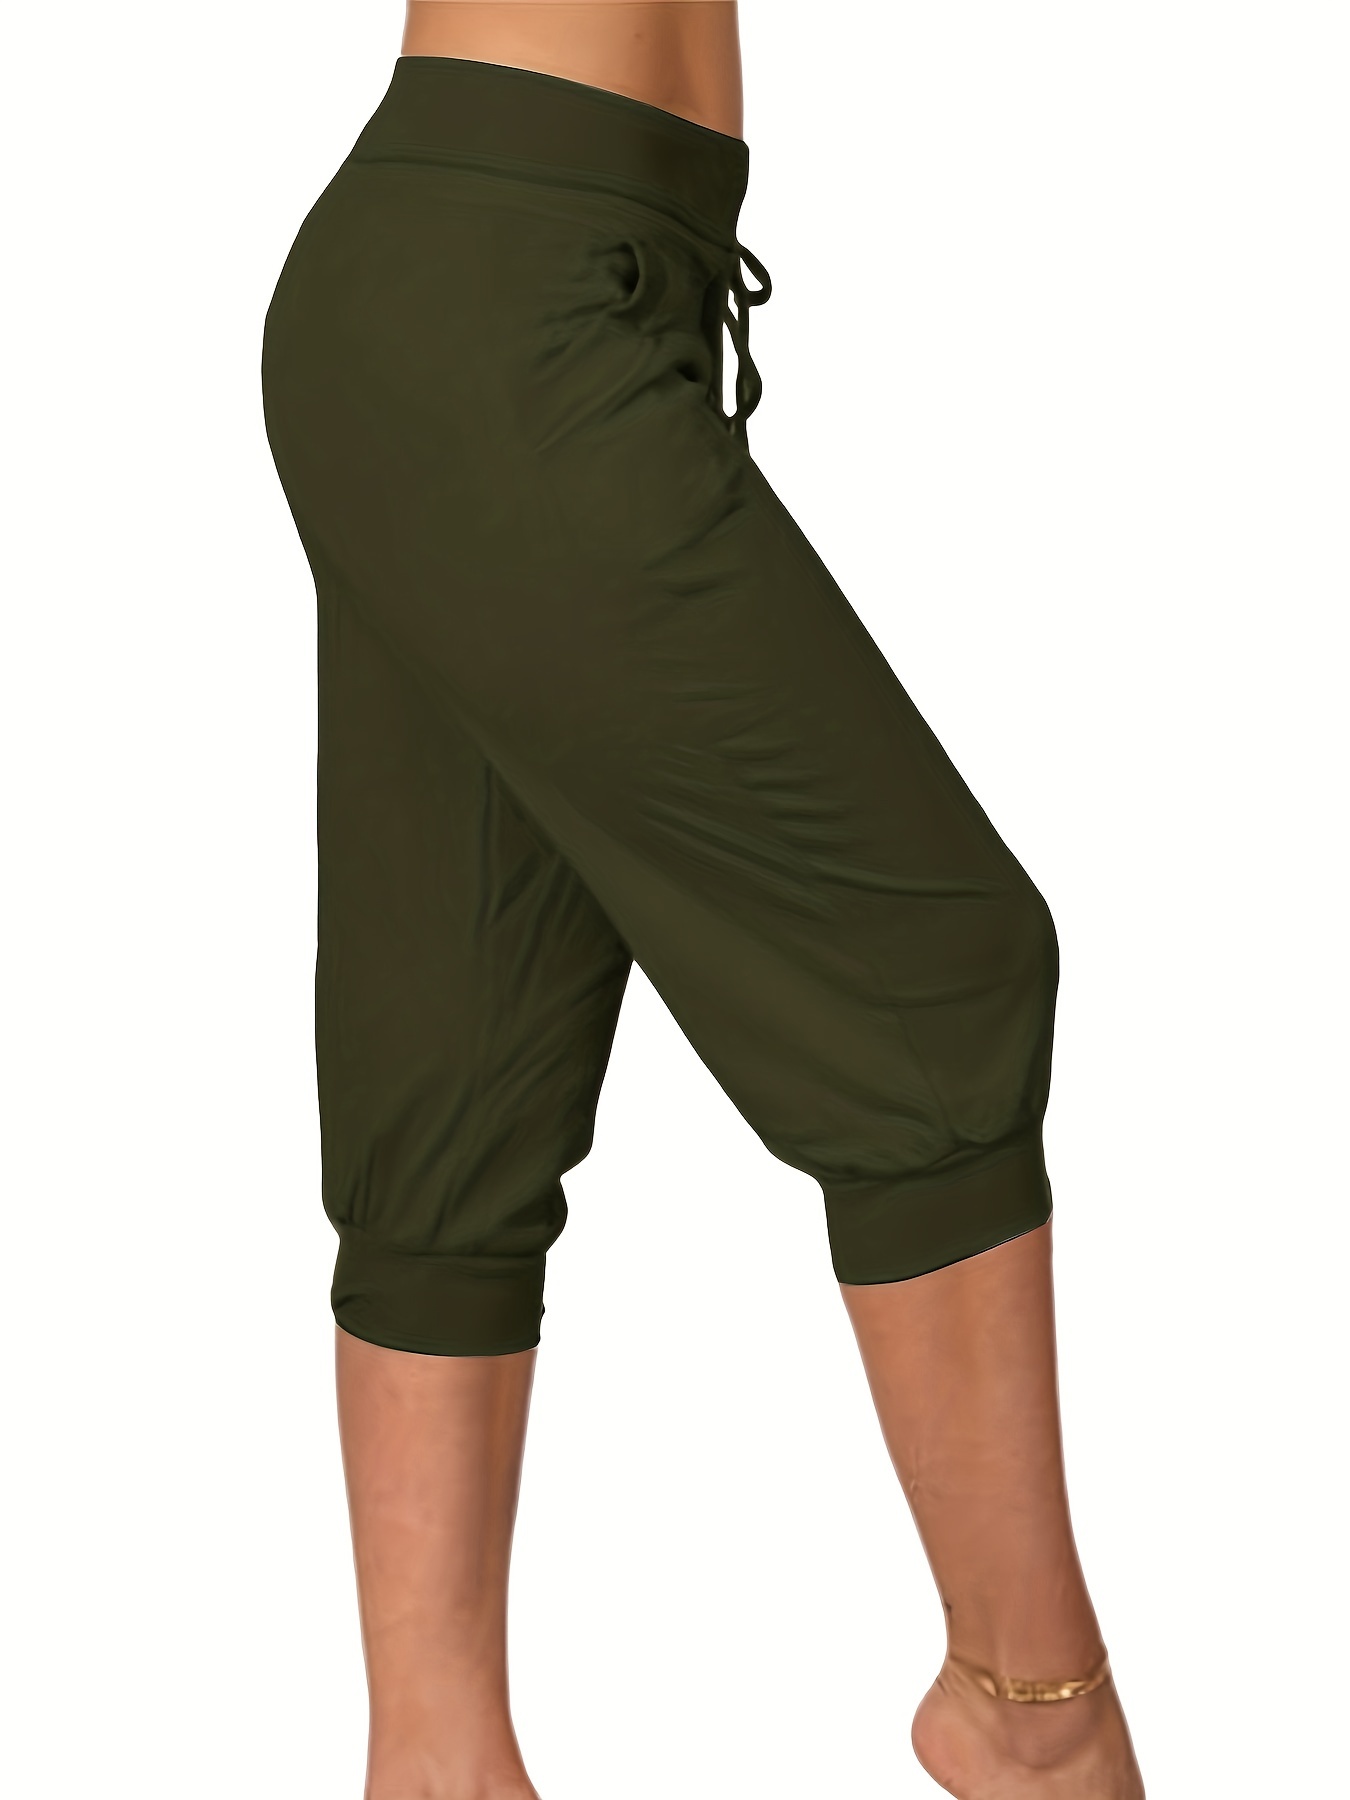 Route 66 Original Clothing Co. Capri Pants Women's Size 6 Green Outdoors